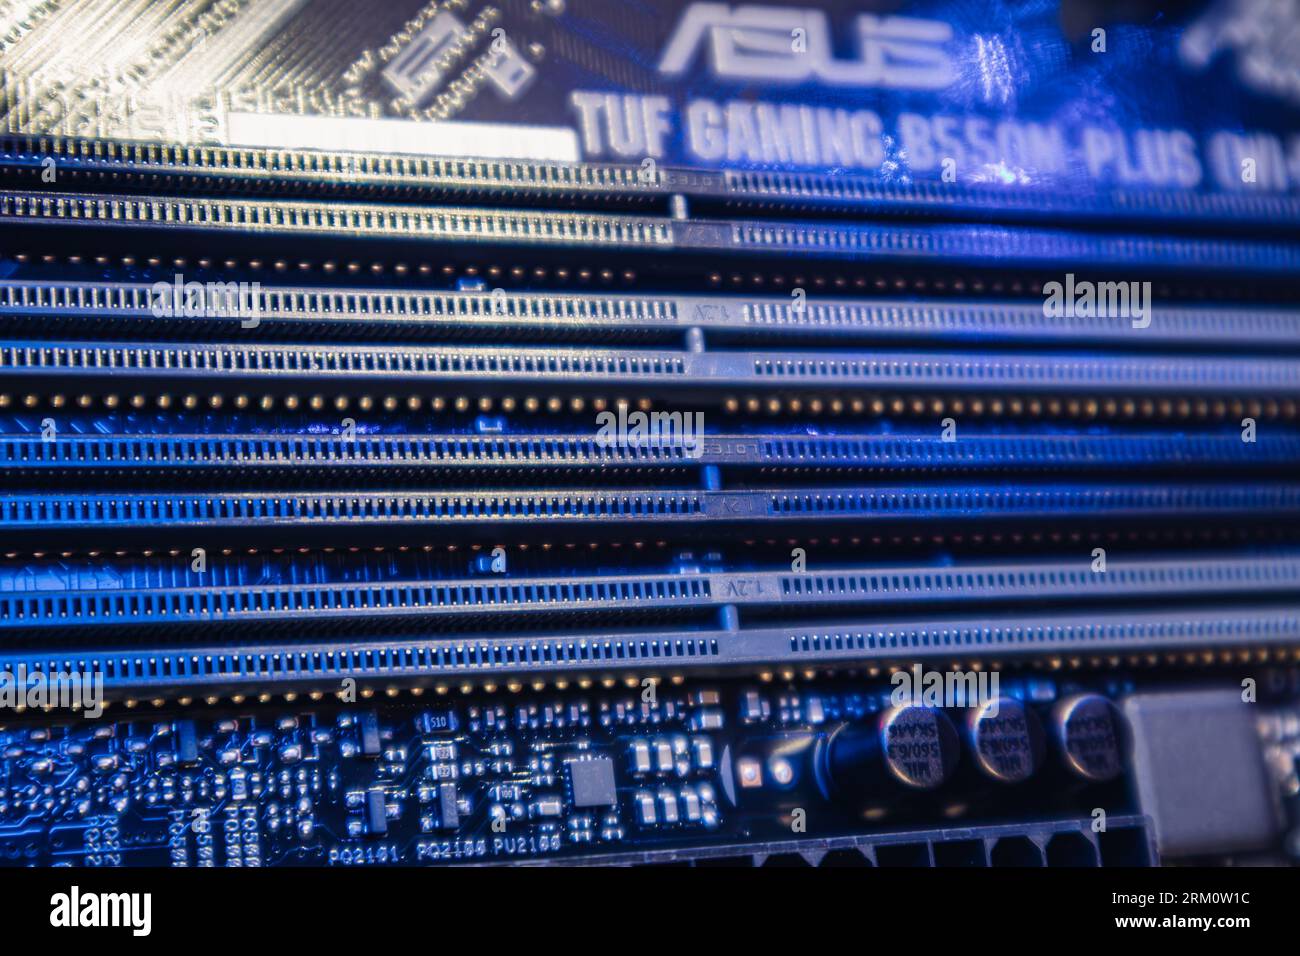 Kyiv, Ukraine - January 05, 2022: Asus Tuf Gaming motherboard, blue DDR RAM memory slots sockets close-up, desktop PC. Computer hardware chipset compo Stock Photo